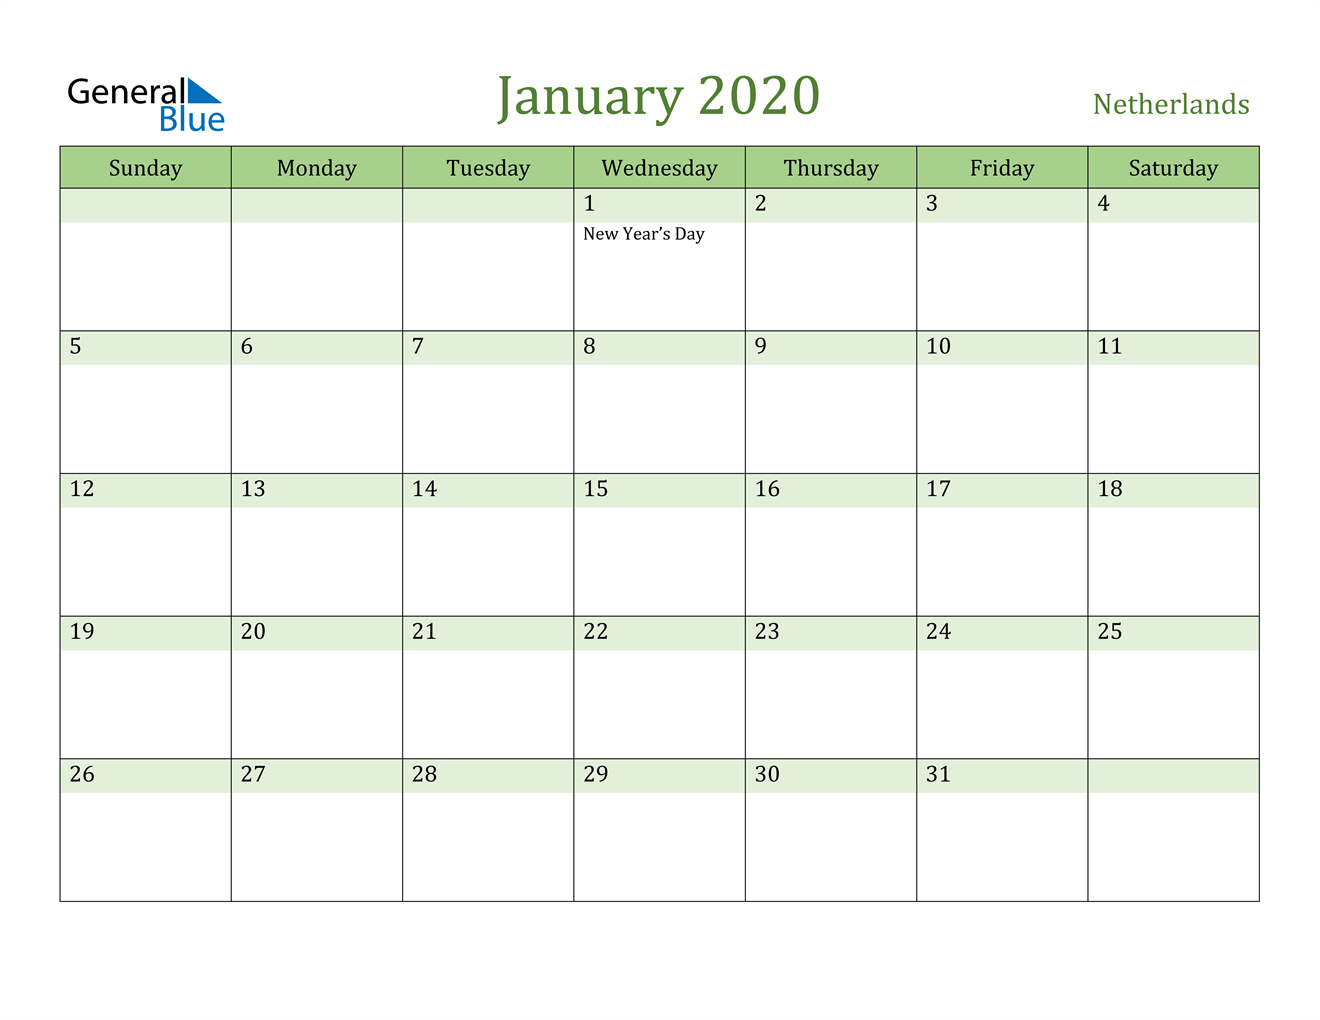 January 2020 Calendar - Netherlands